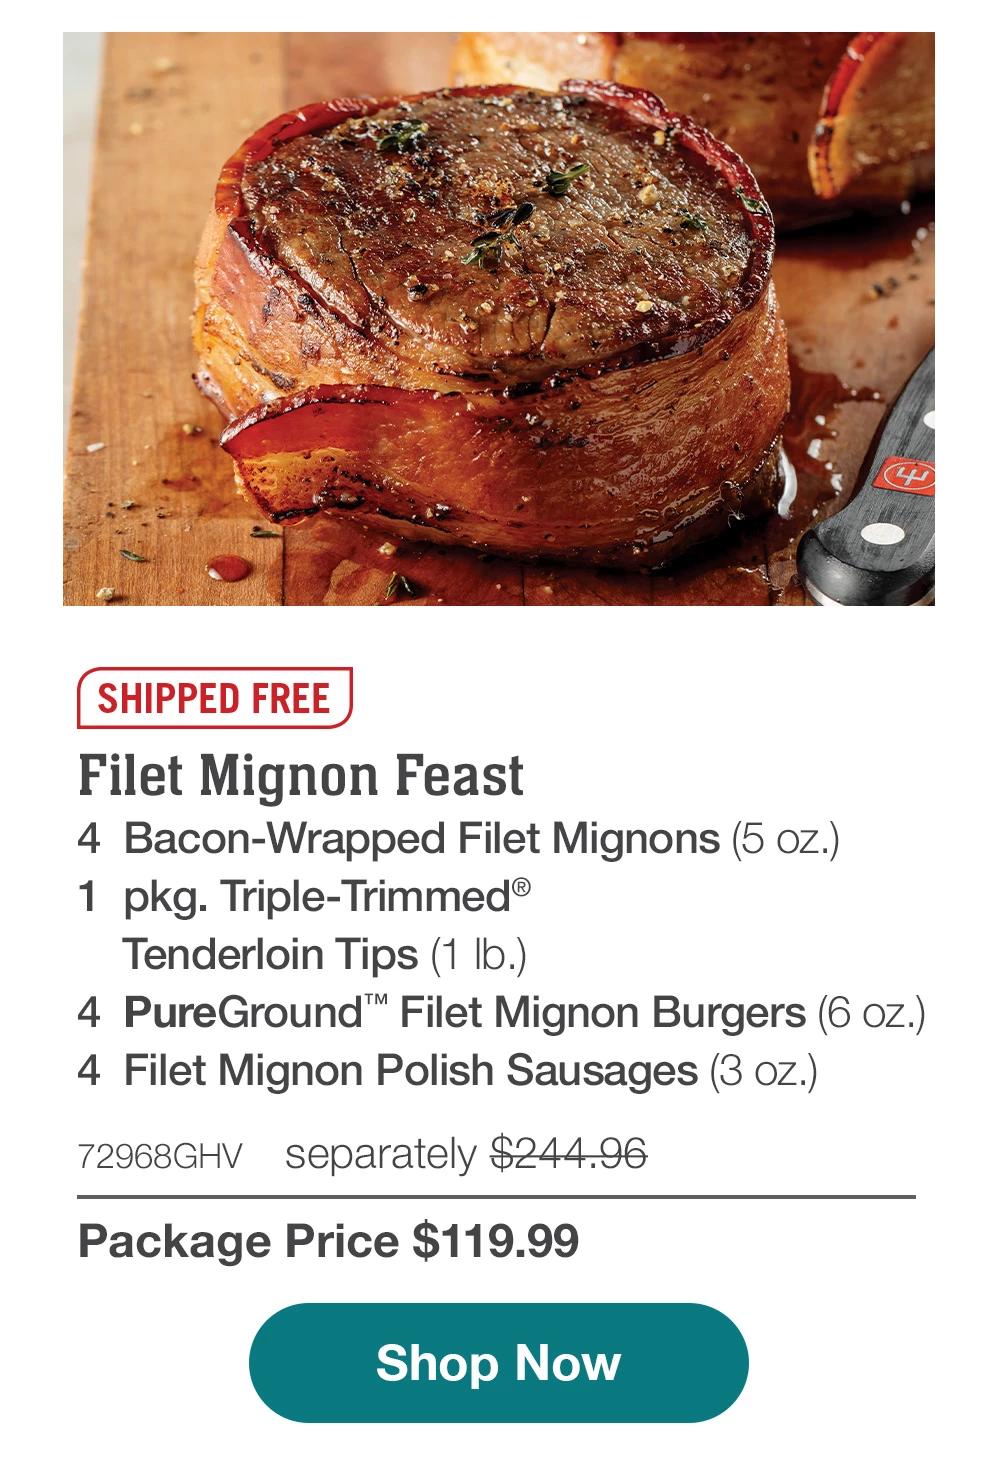 SHIPPED FREE | Filet Mignon Feast - 4 Bacon-Wrapped Filet Mignons (5 oz.) - 1 pkg. Triple-Trimmed® Tenderloin Tips (1 Ib.) - 4 PureGround™ Filet Mignon Burgers (6 OZ.) - 4 Filet Mignon Polish Sausages (3 Oz.) - 72968GHV separately $244.96 - Package Price $119.99 | Shop Now